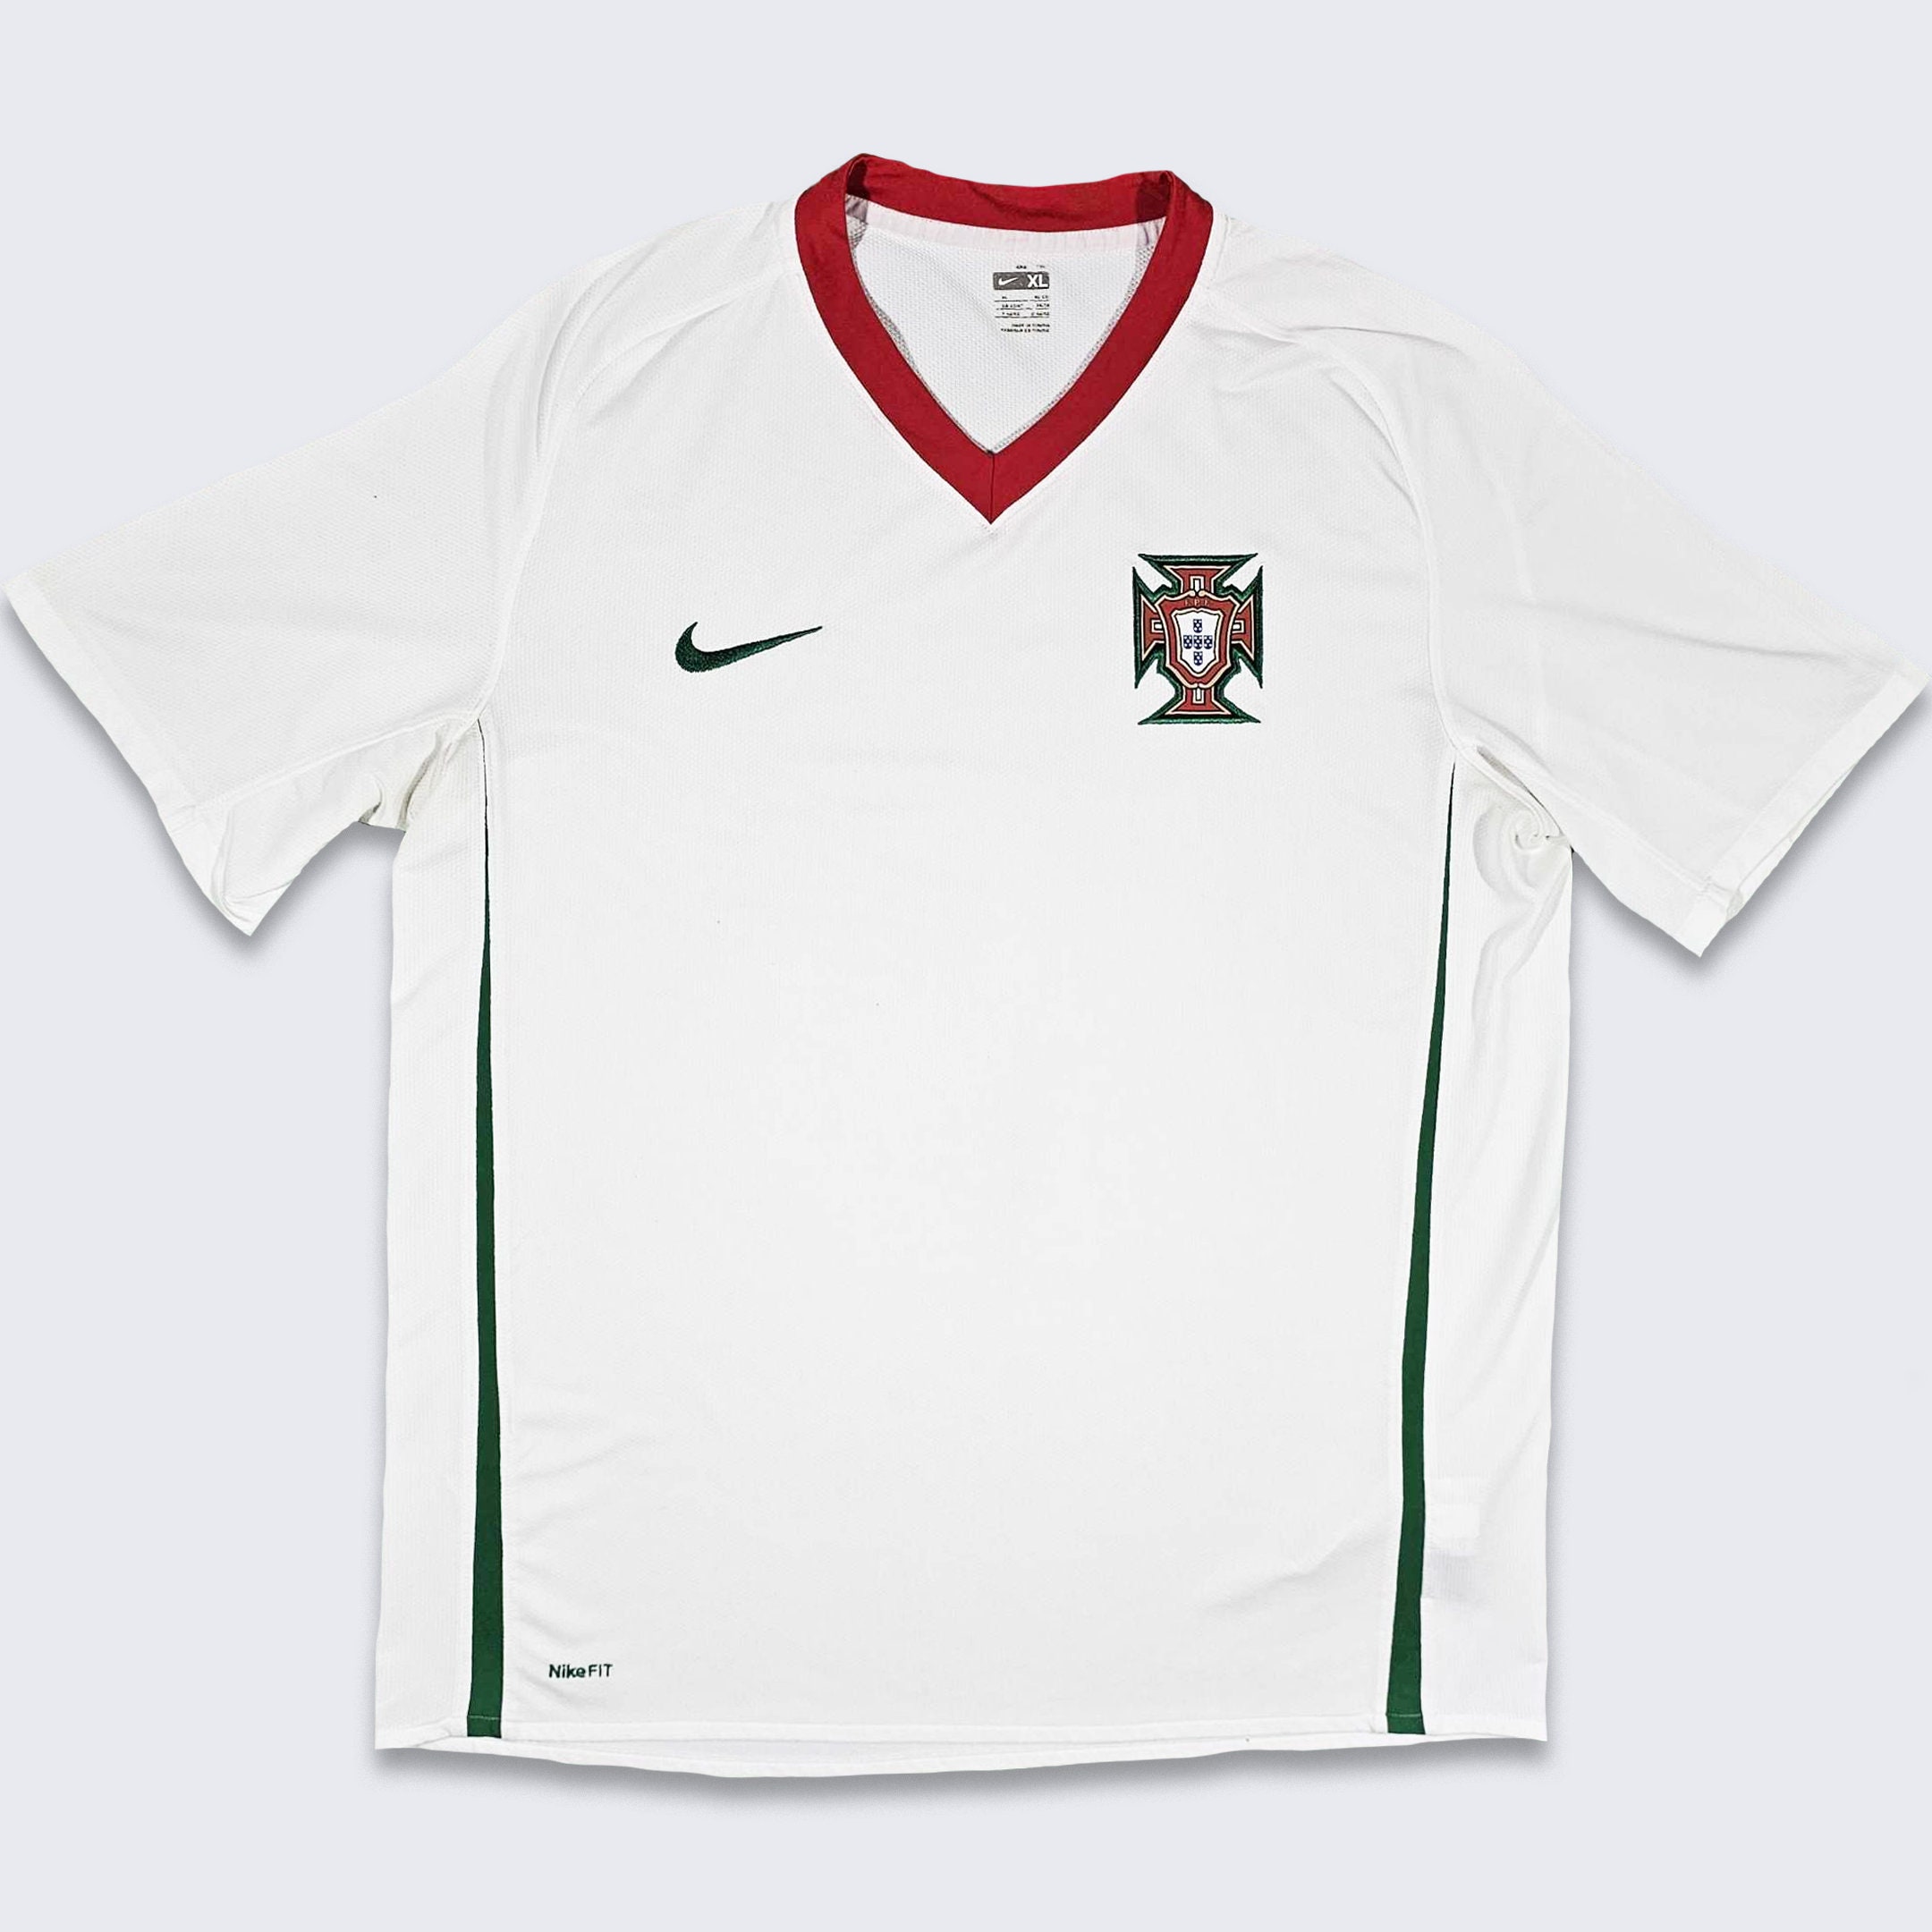 2008 Nike Portugal Soccer Jerseys White/Green Large Set Of 2